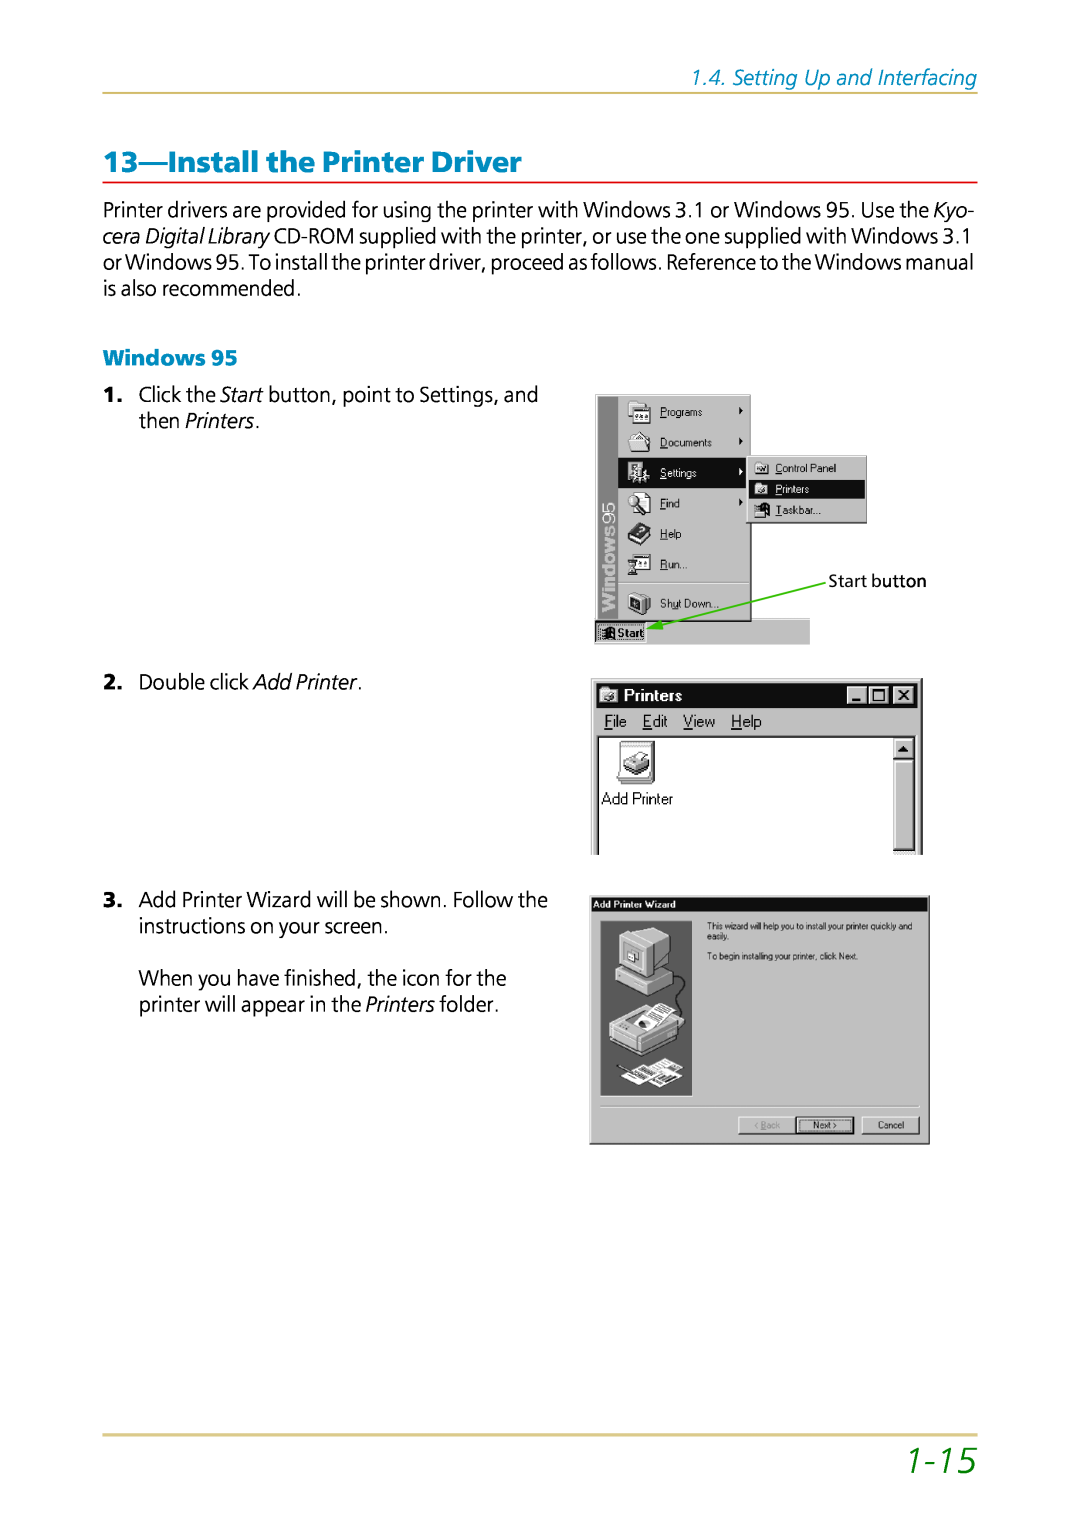 Kyocera FS-1700 user manual 1-15, 13—Installthe Printer Driver, Setting Up and Interfacing, Windows 